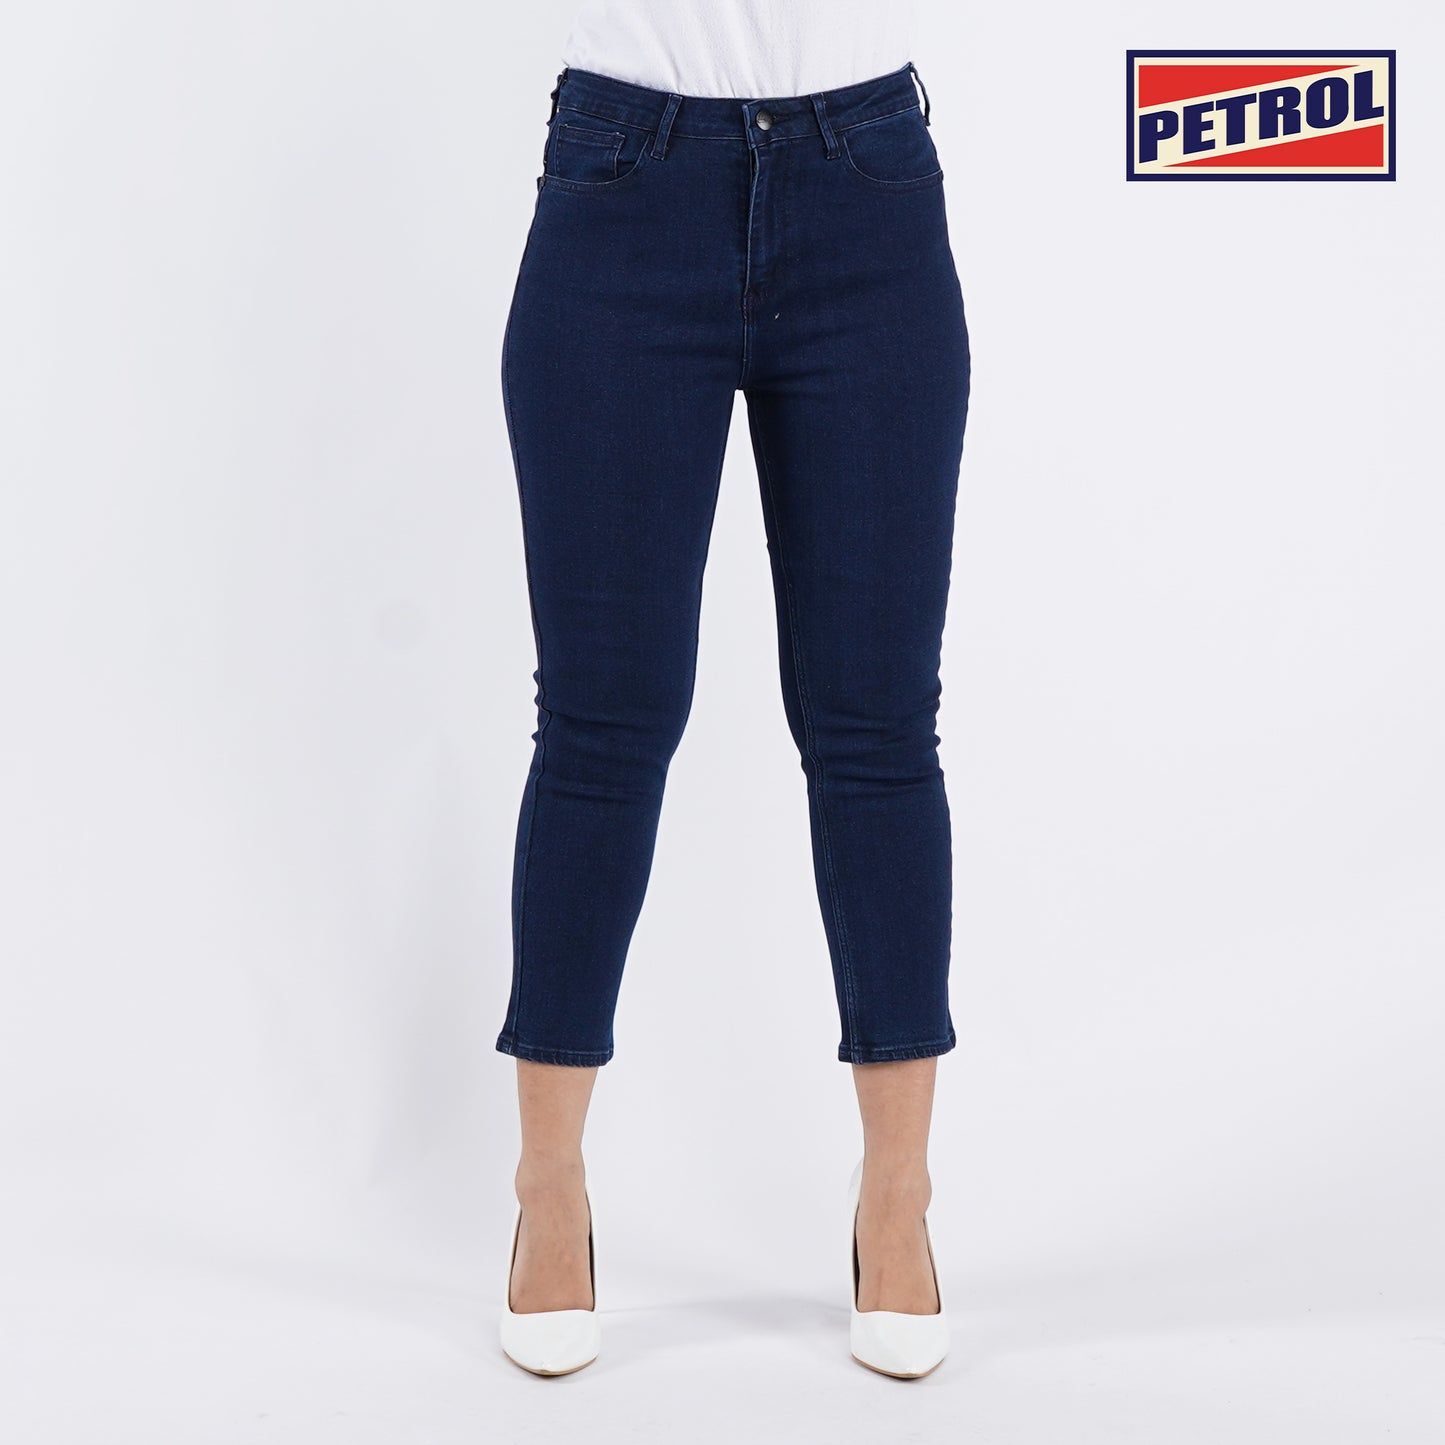 Petrol Ladies Basic Denim Fashionable Casual Apparel Slim Fitting Mid waist Trendy Fashion High Quality Bio Rinse Jeans For Women 146560-U (Dark Shade)